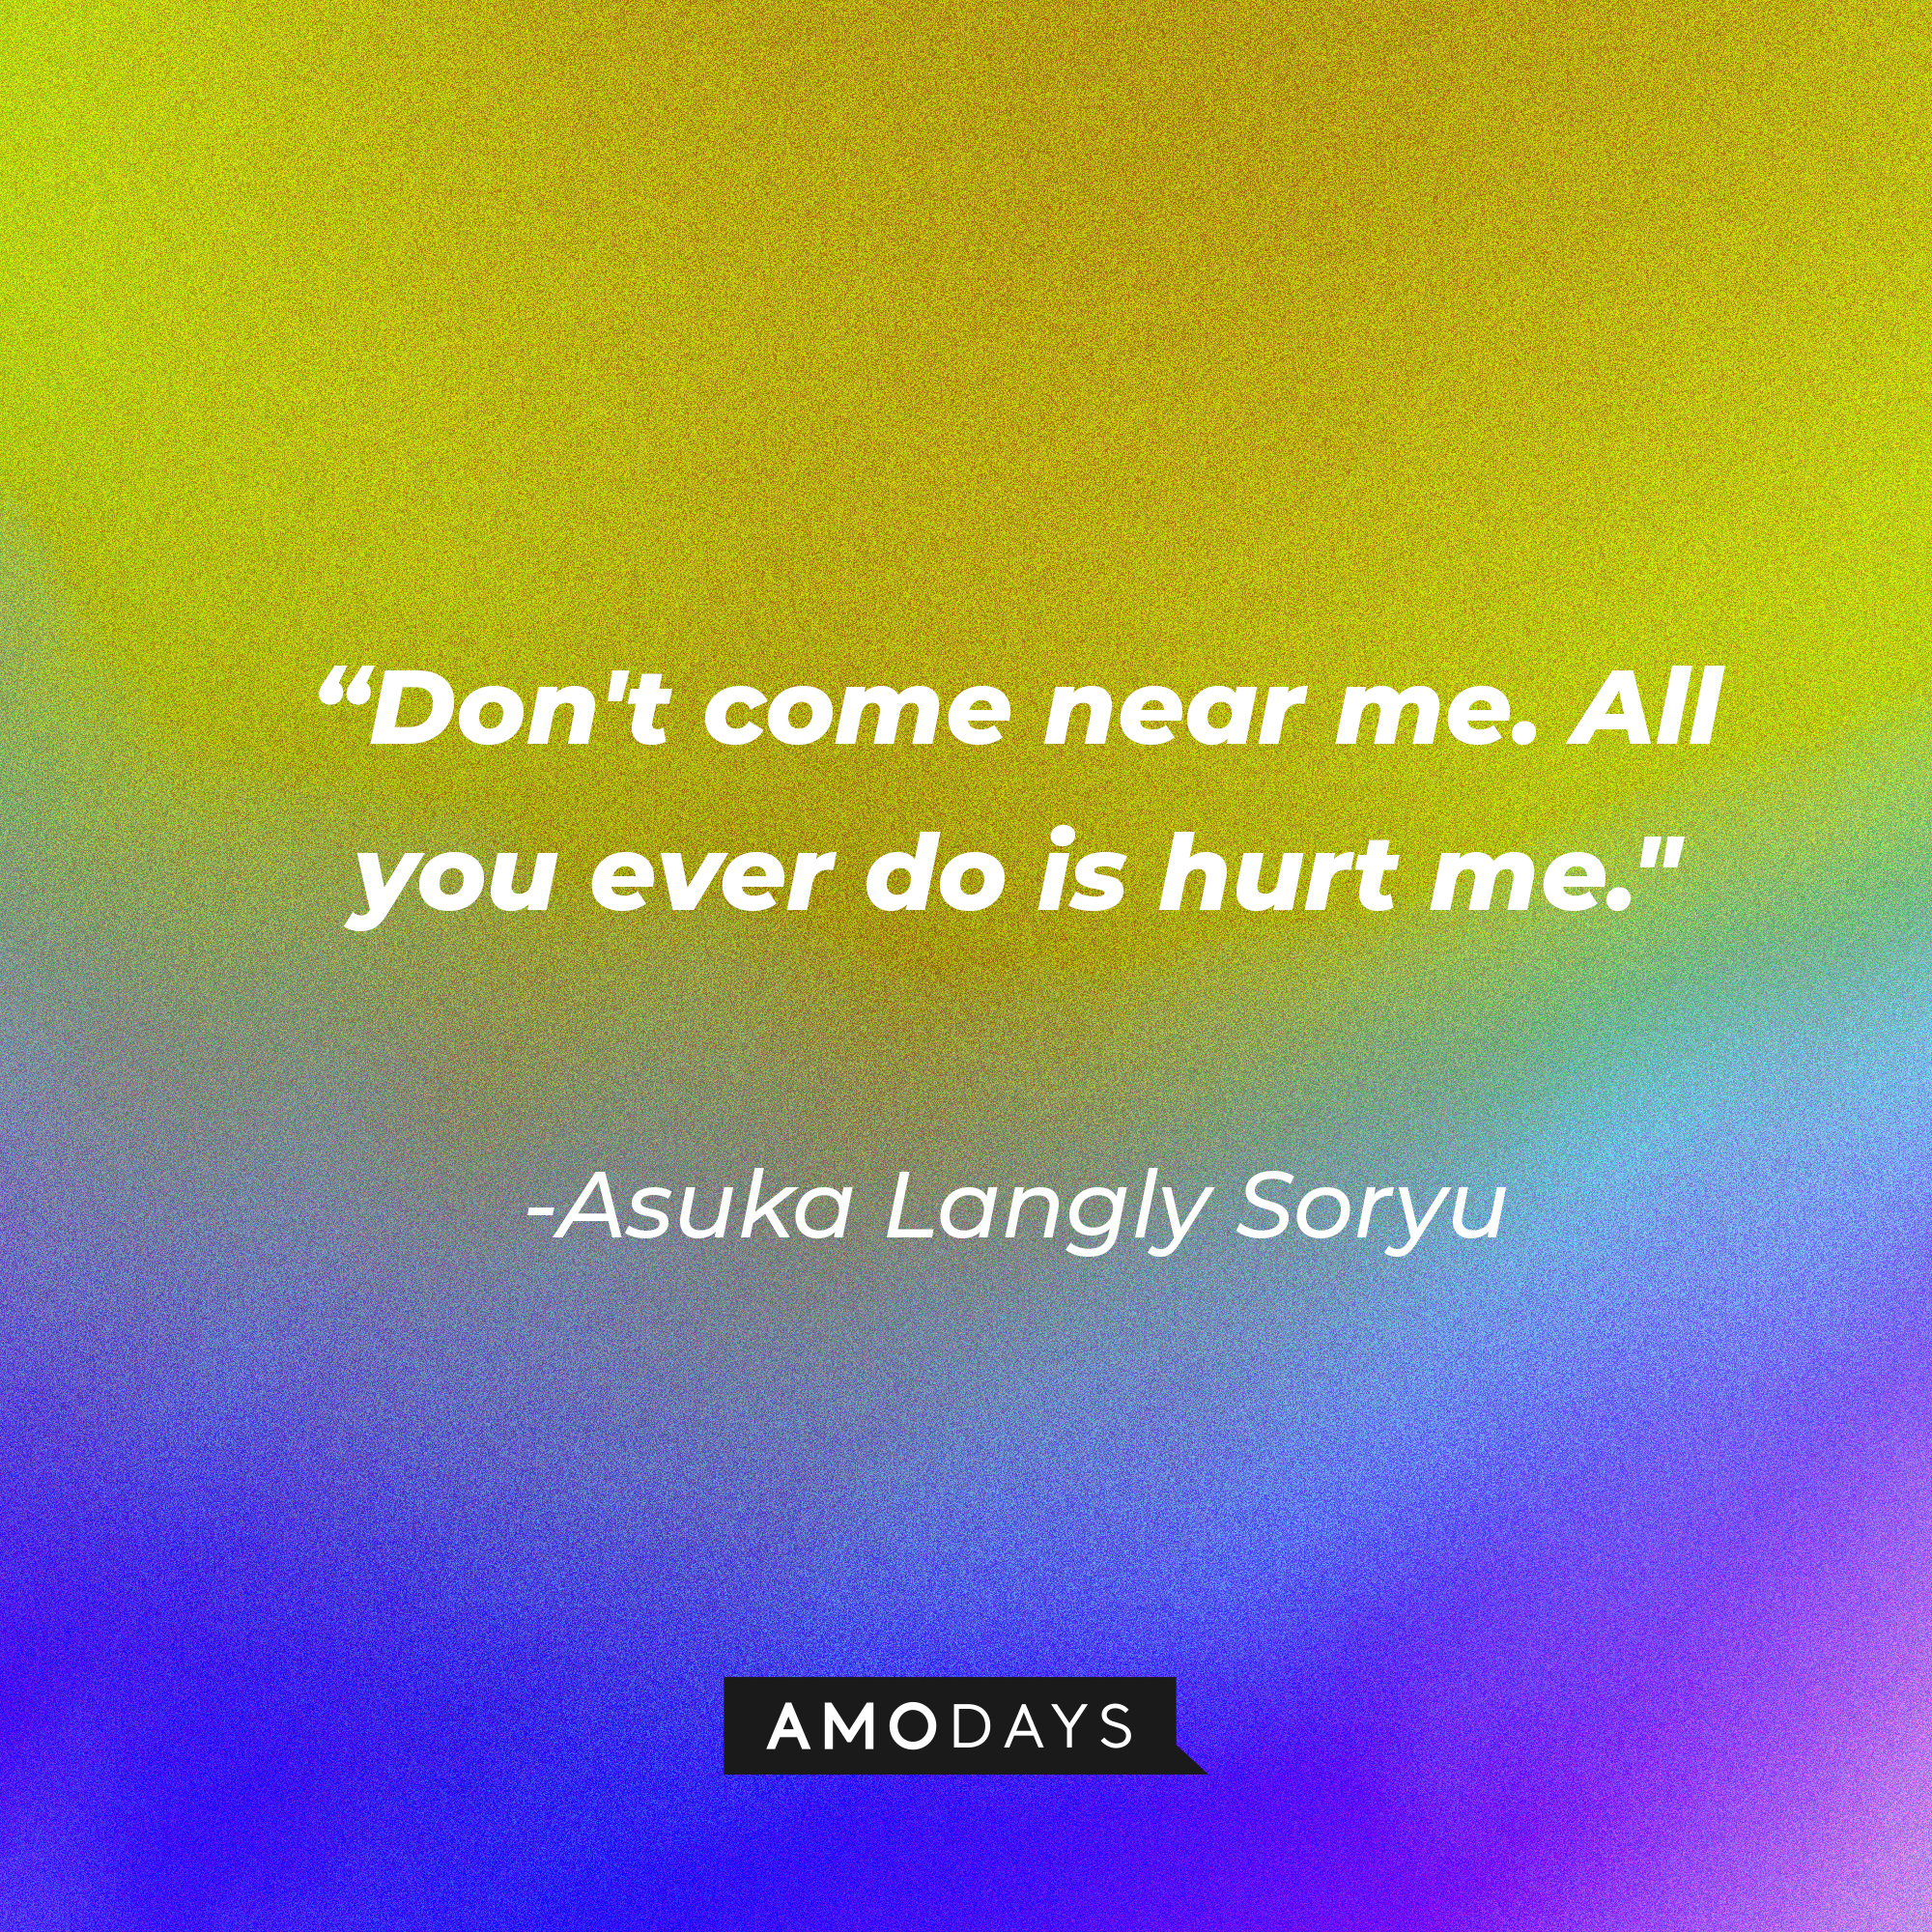 Shinji Ikari’s quote: “Don't come near me. All you ever do is hurt me." | Source: AmoDays